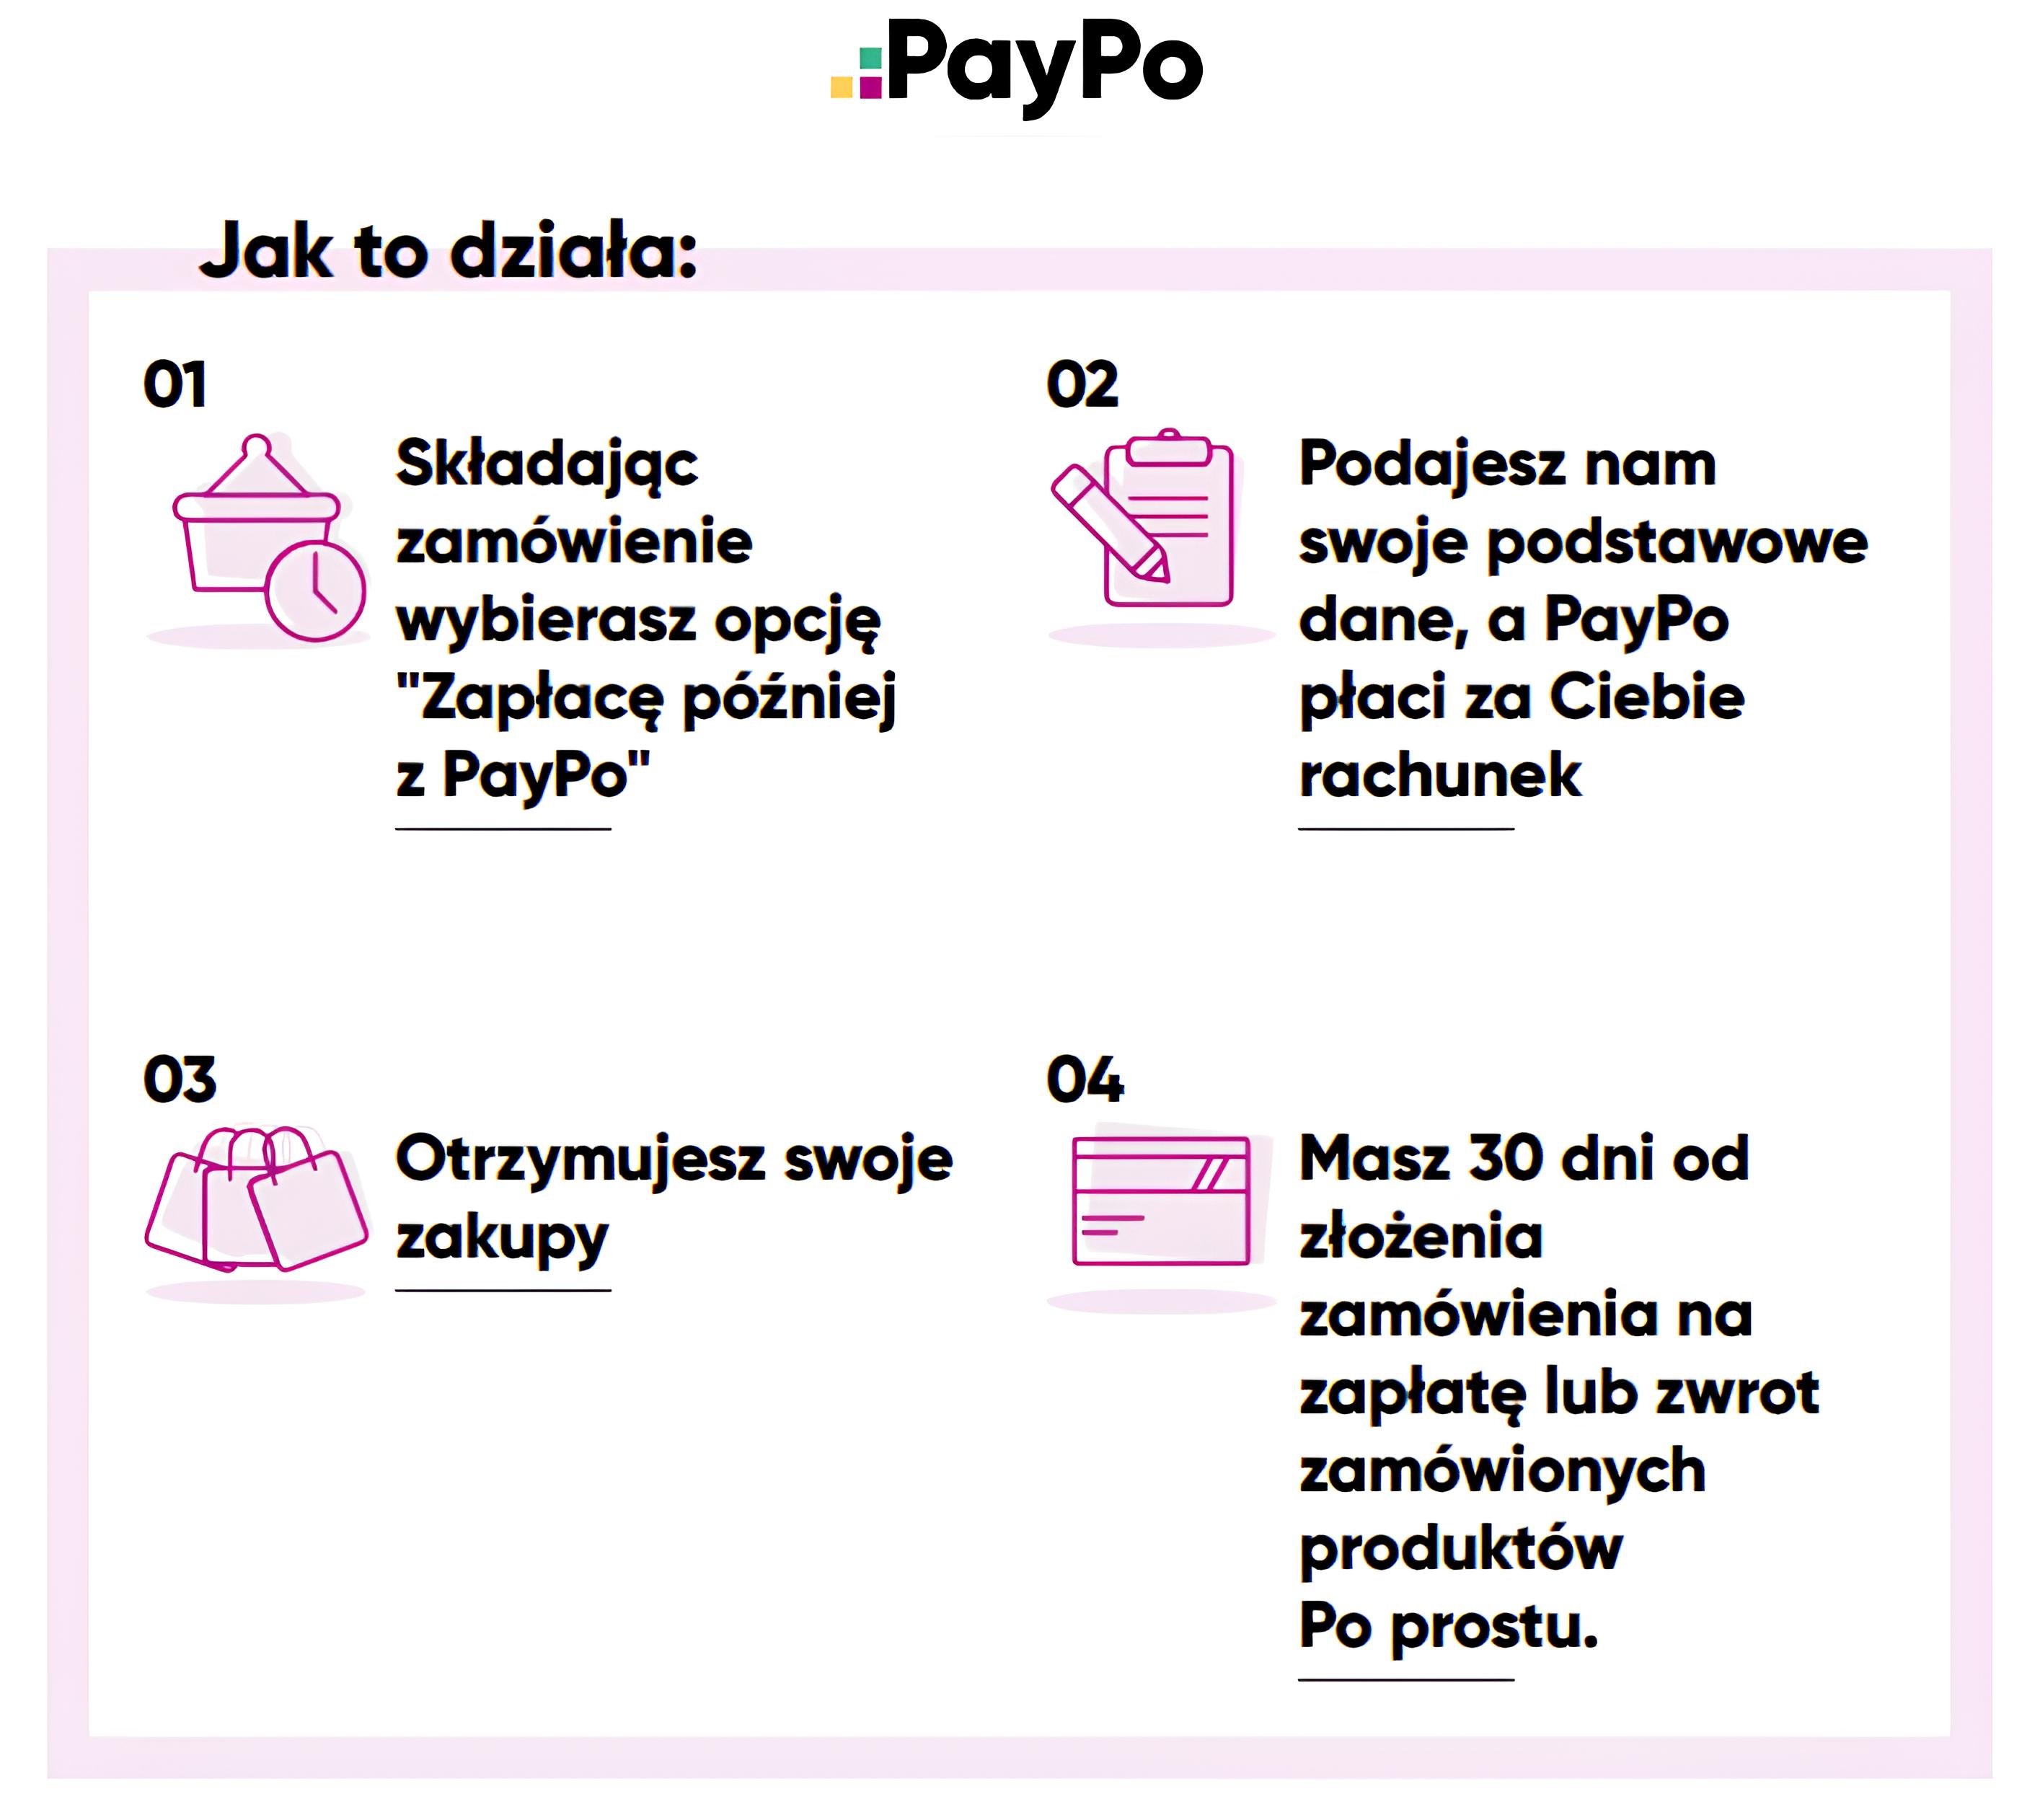 paypo-1-1-.jpg